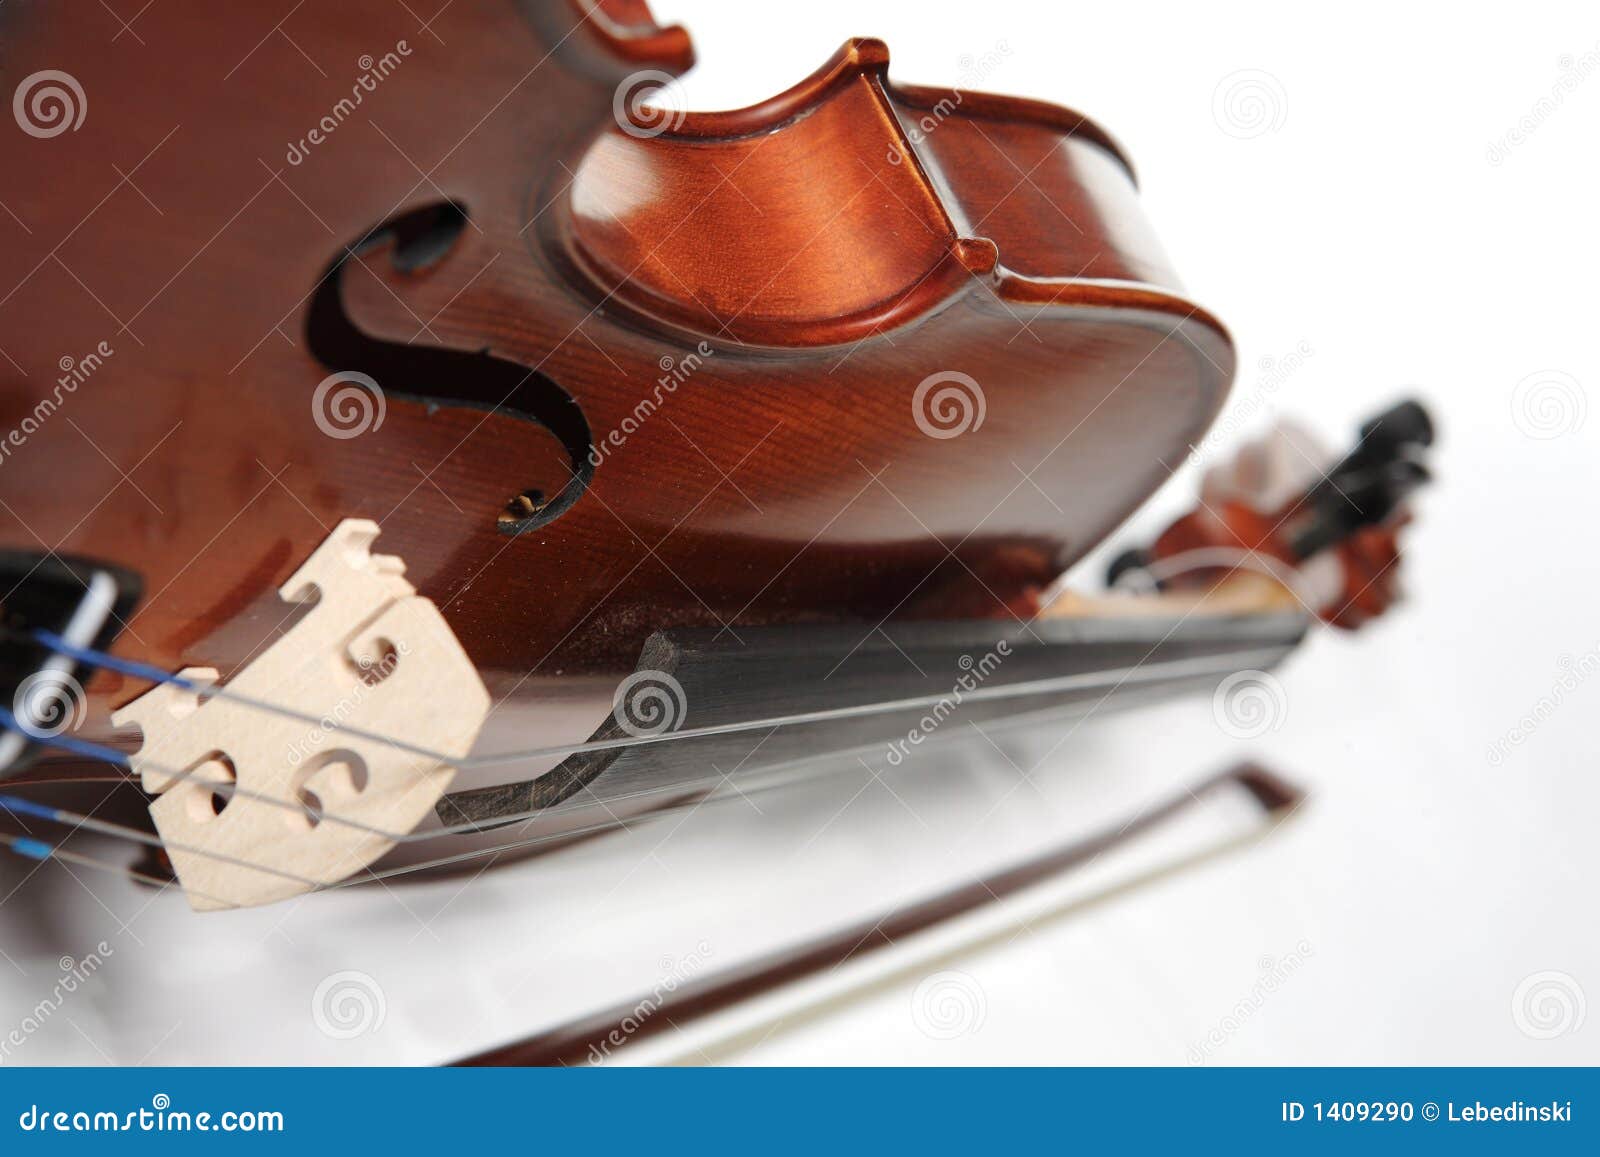 violins. soft focus